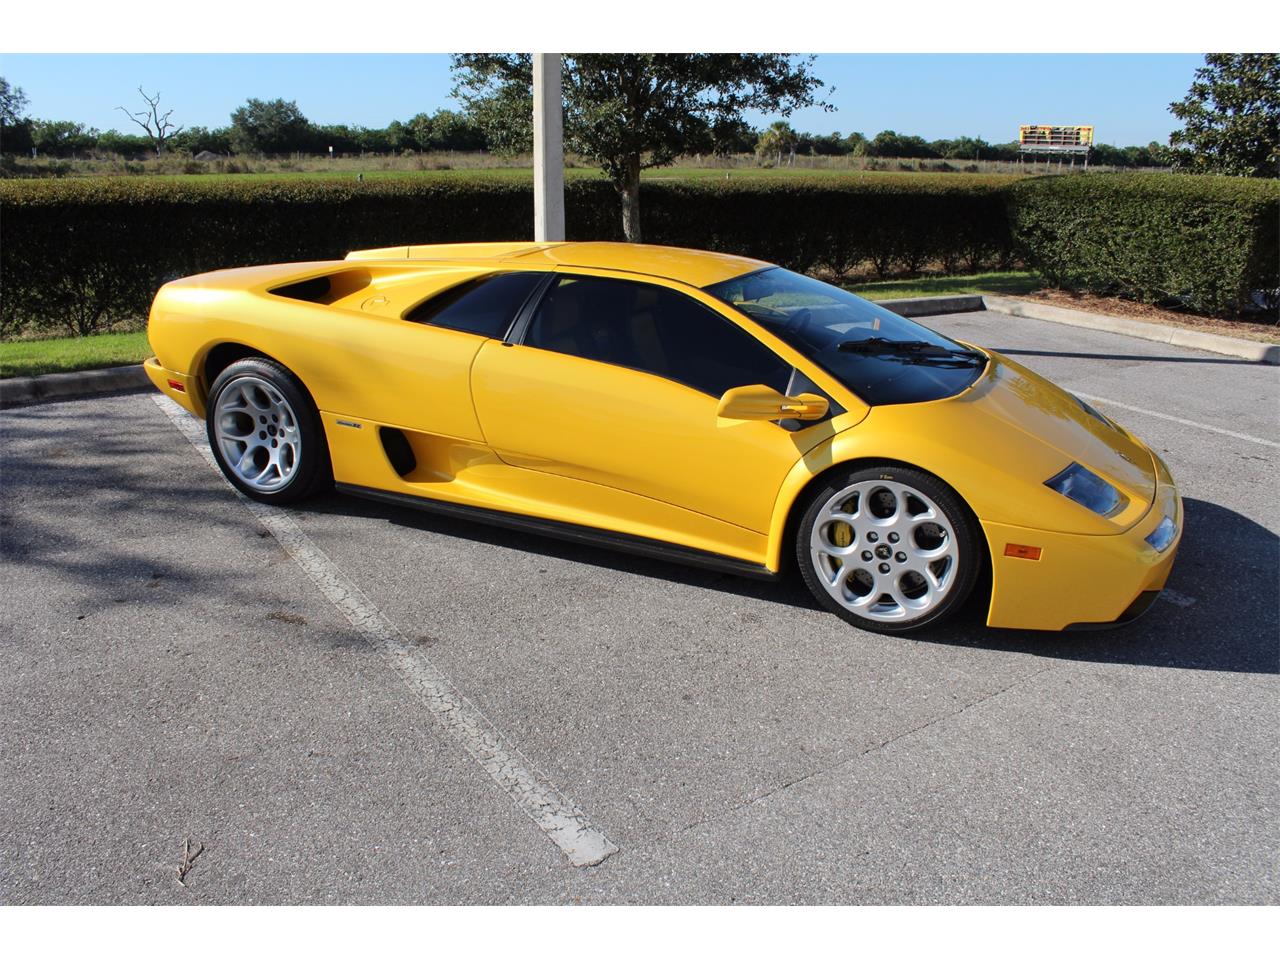 2001 Lamborghini Diablo for Sale | ClassicCars.com | CC ...